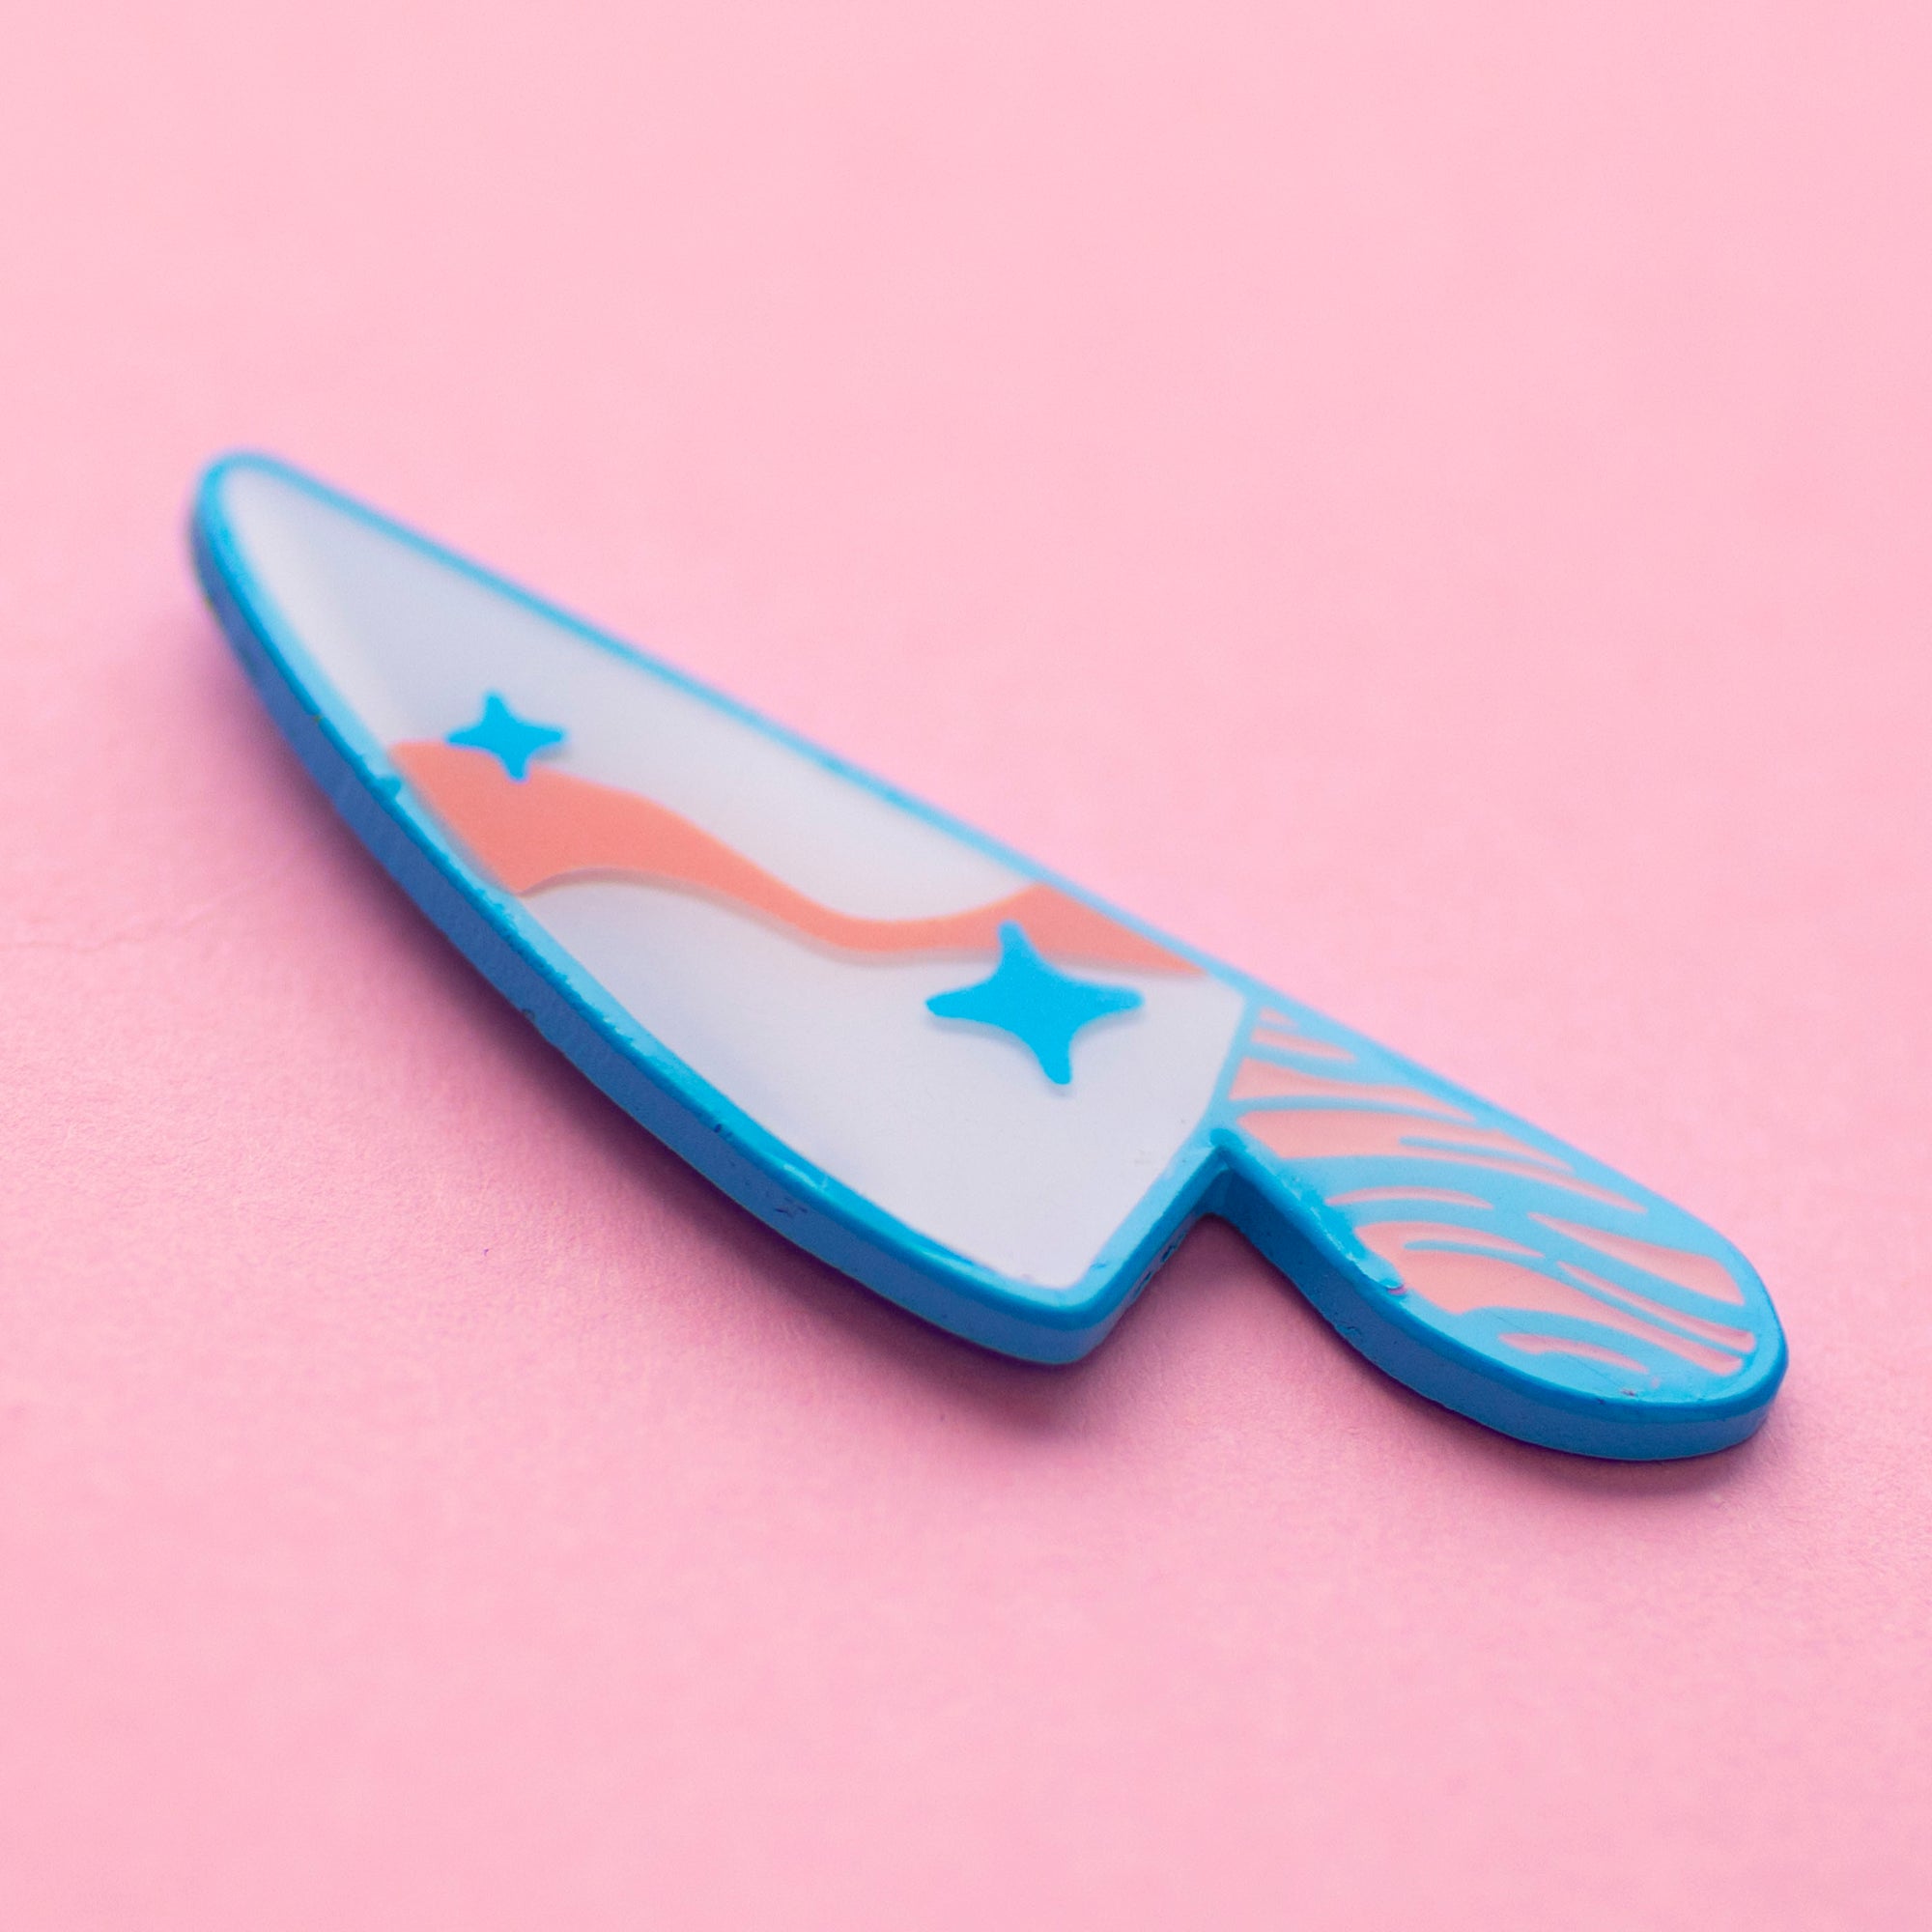 Transgender Pride Flag Enamel Pin